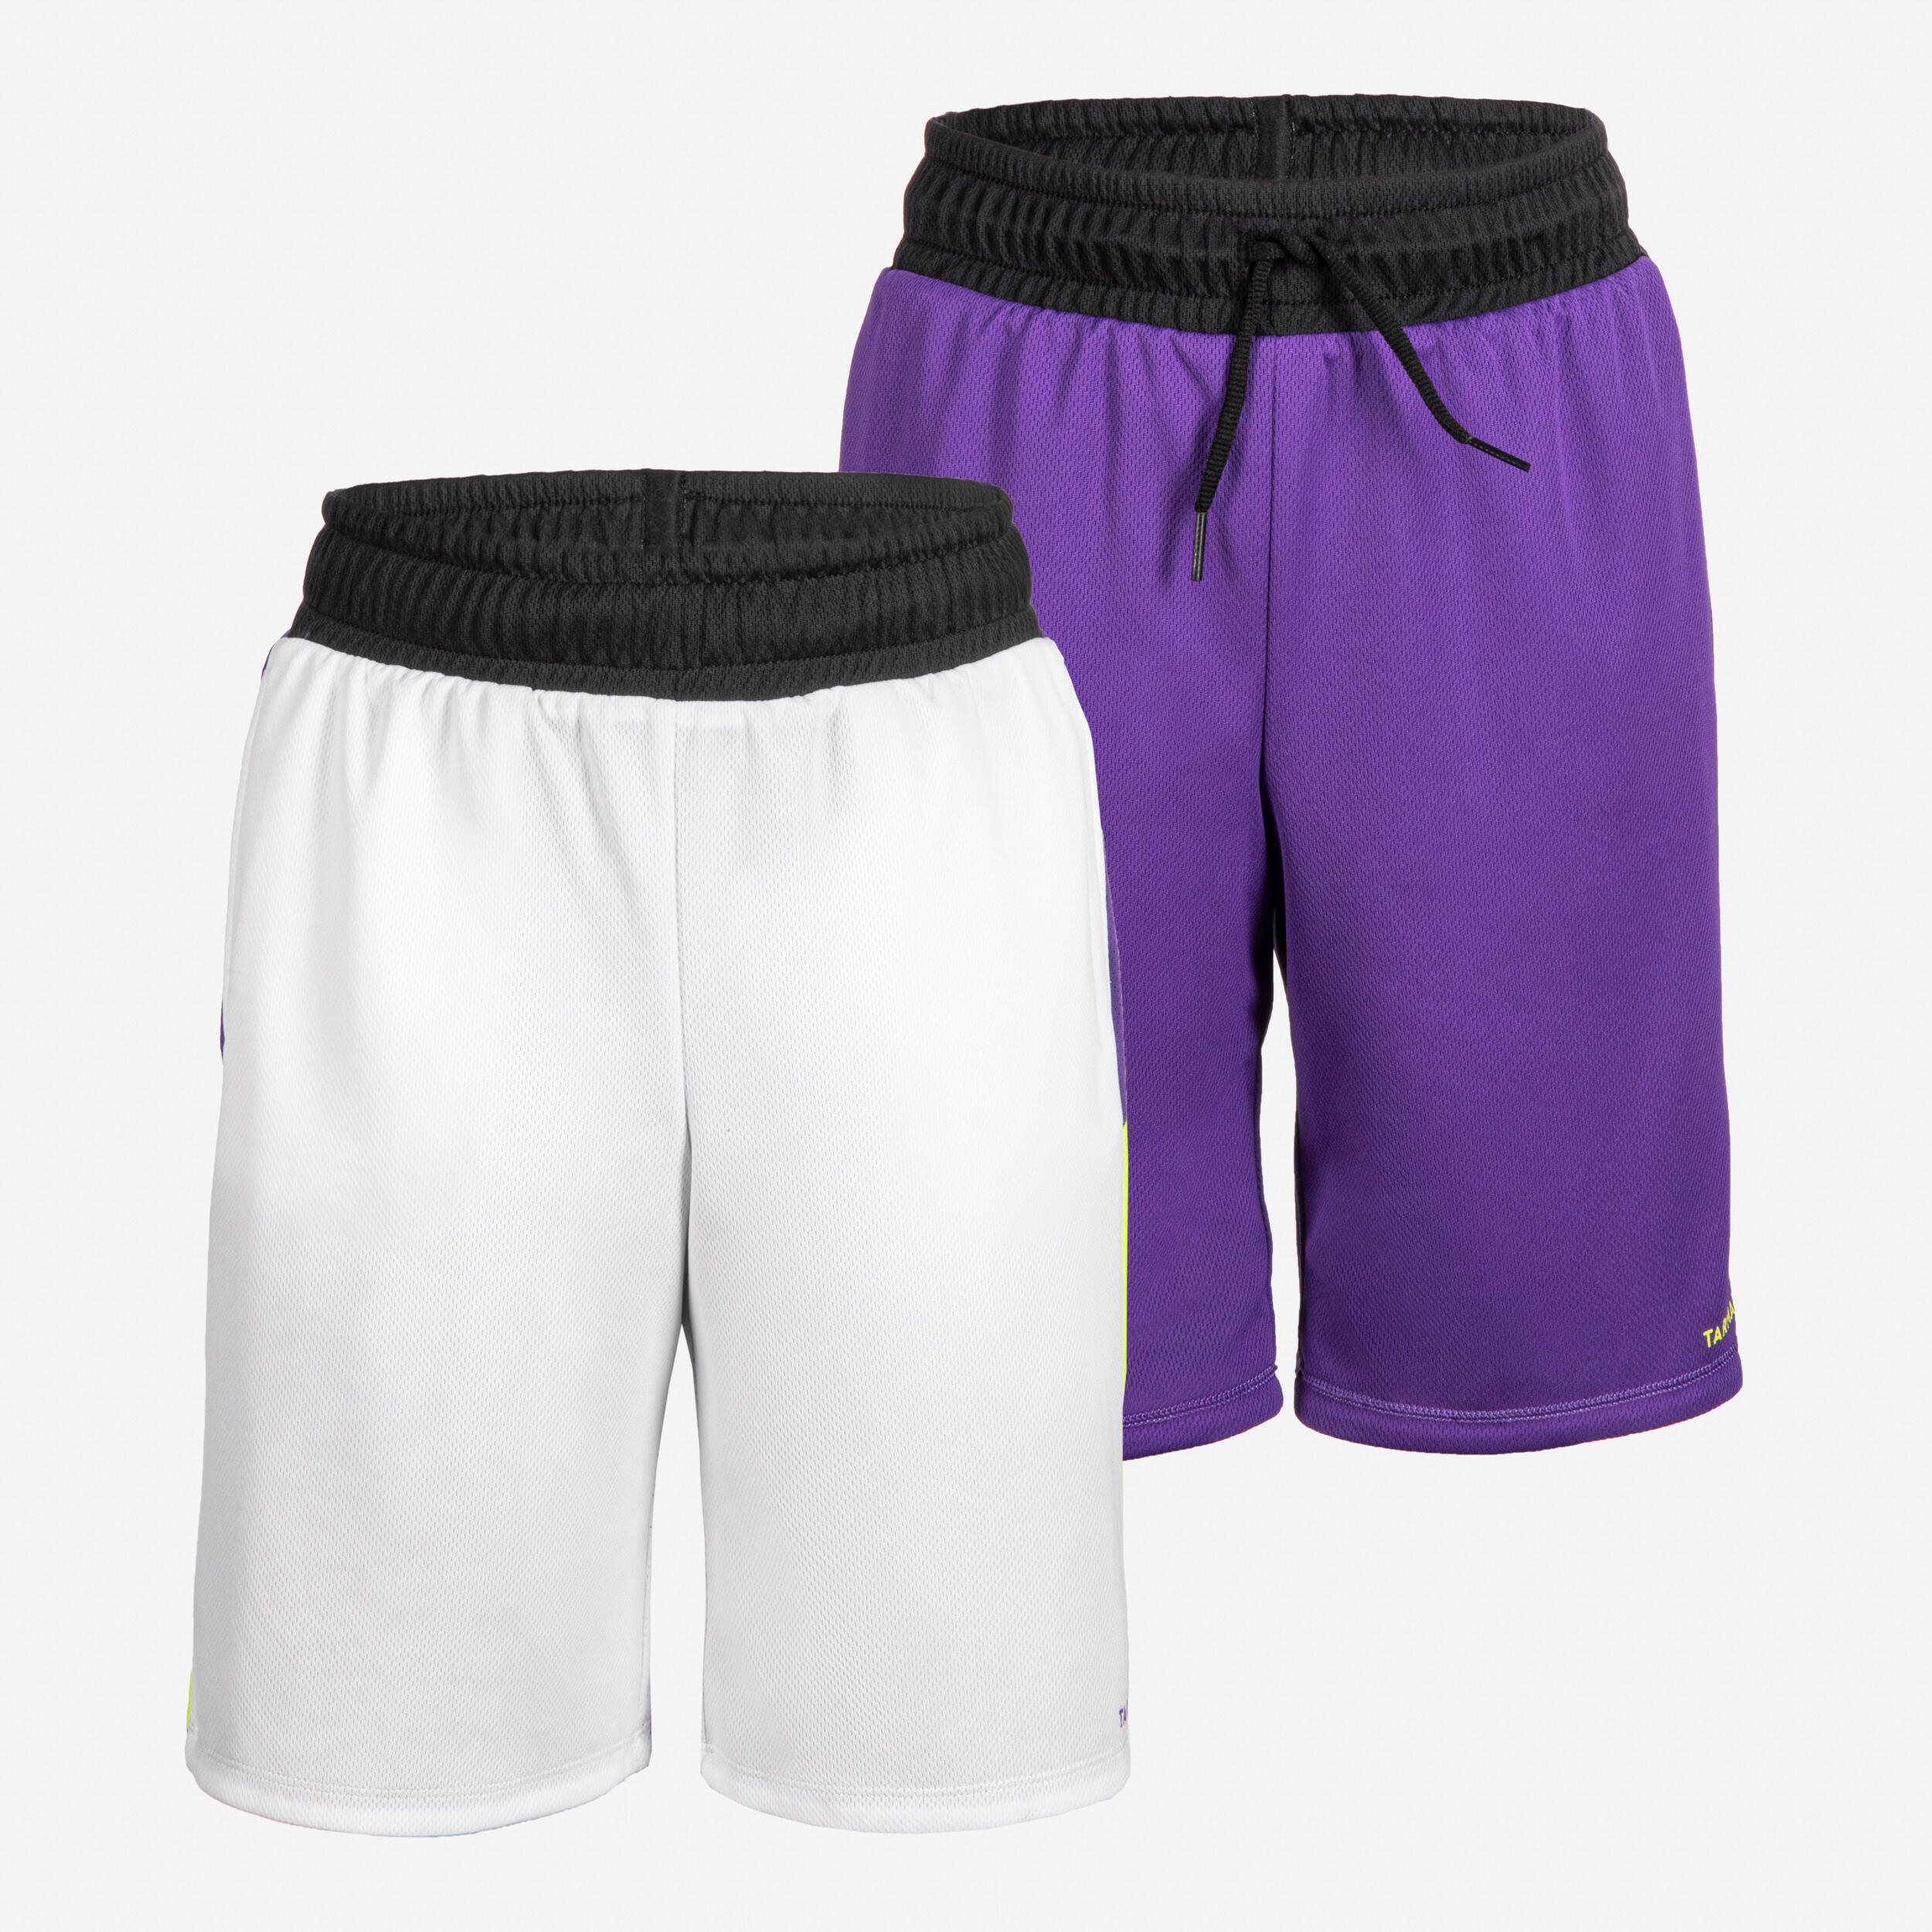 Kids' Reversible Basketball Shorts SH500R - White/Purple 3/11